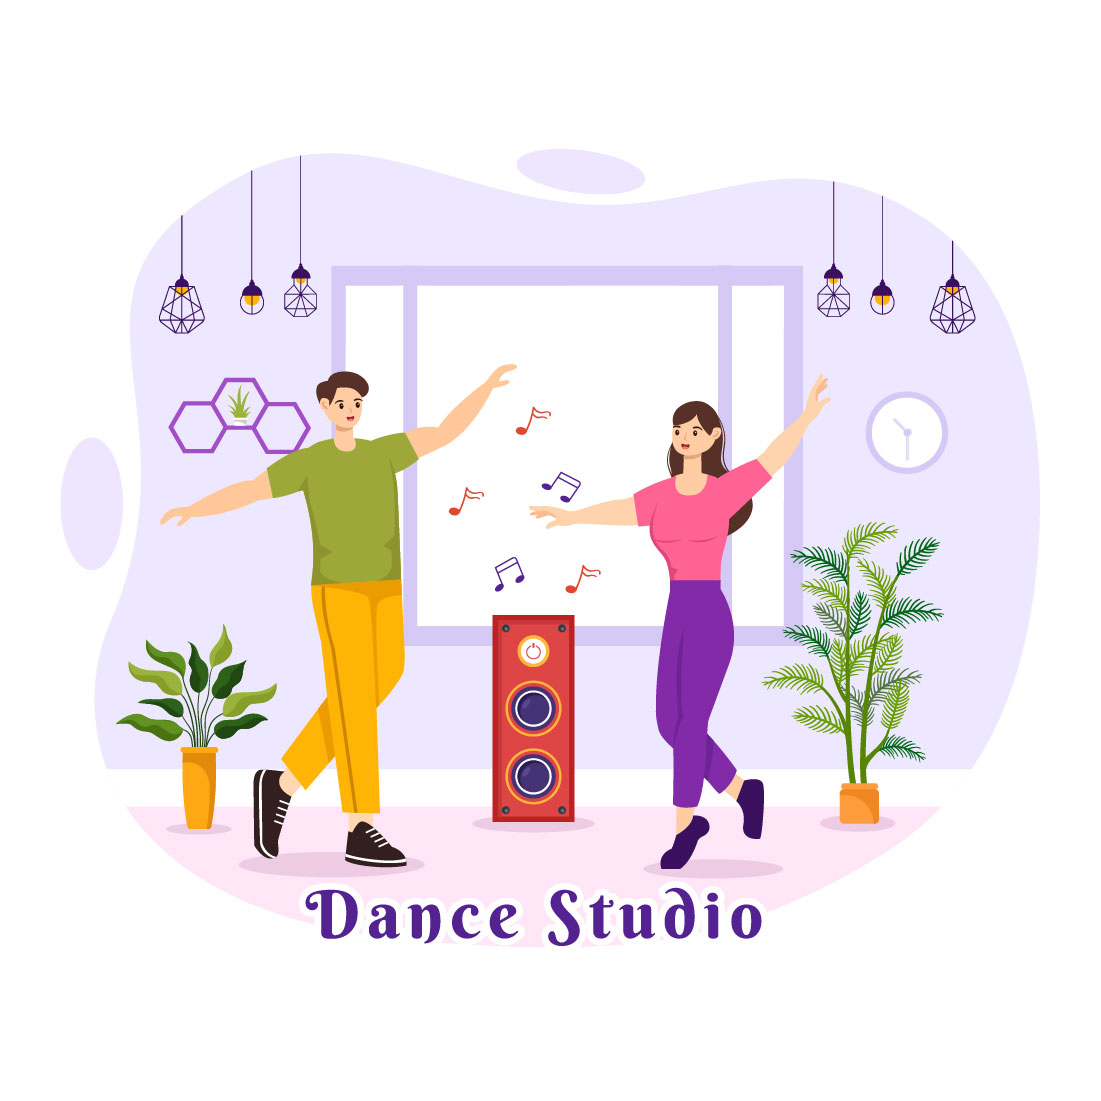 12 Dance Studio Illustration preview image.